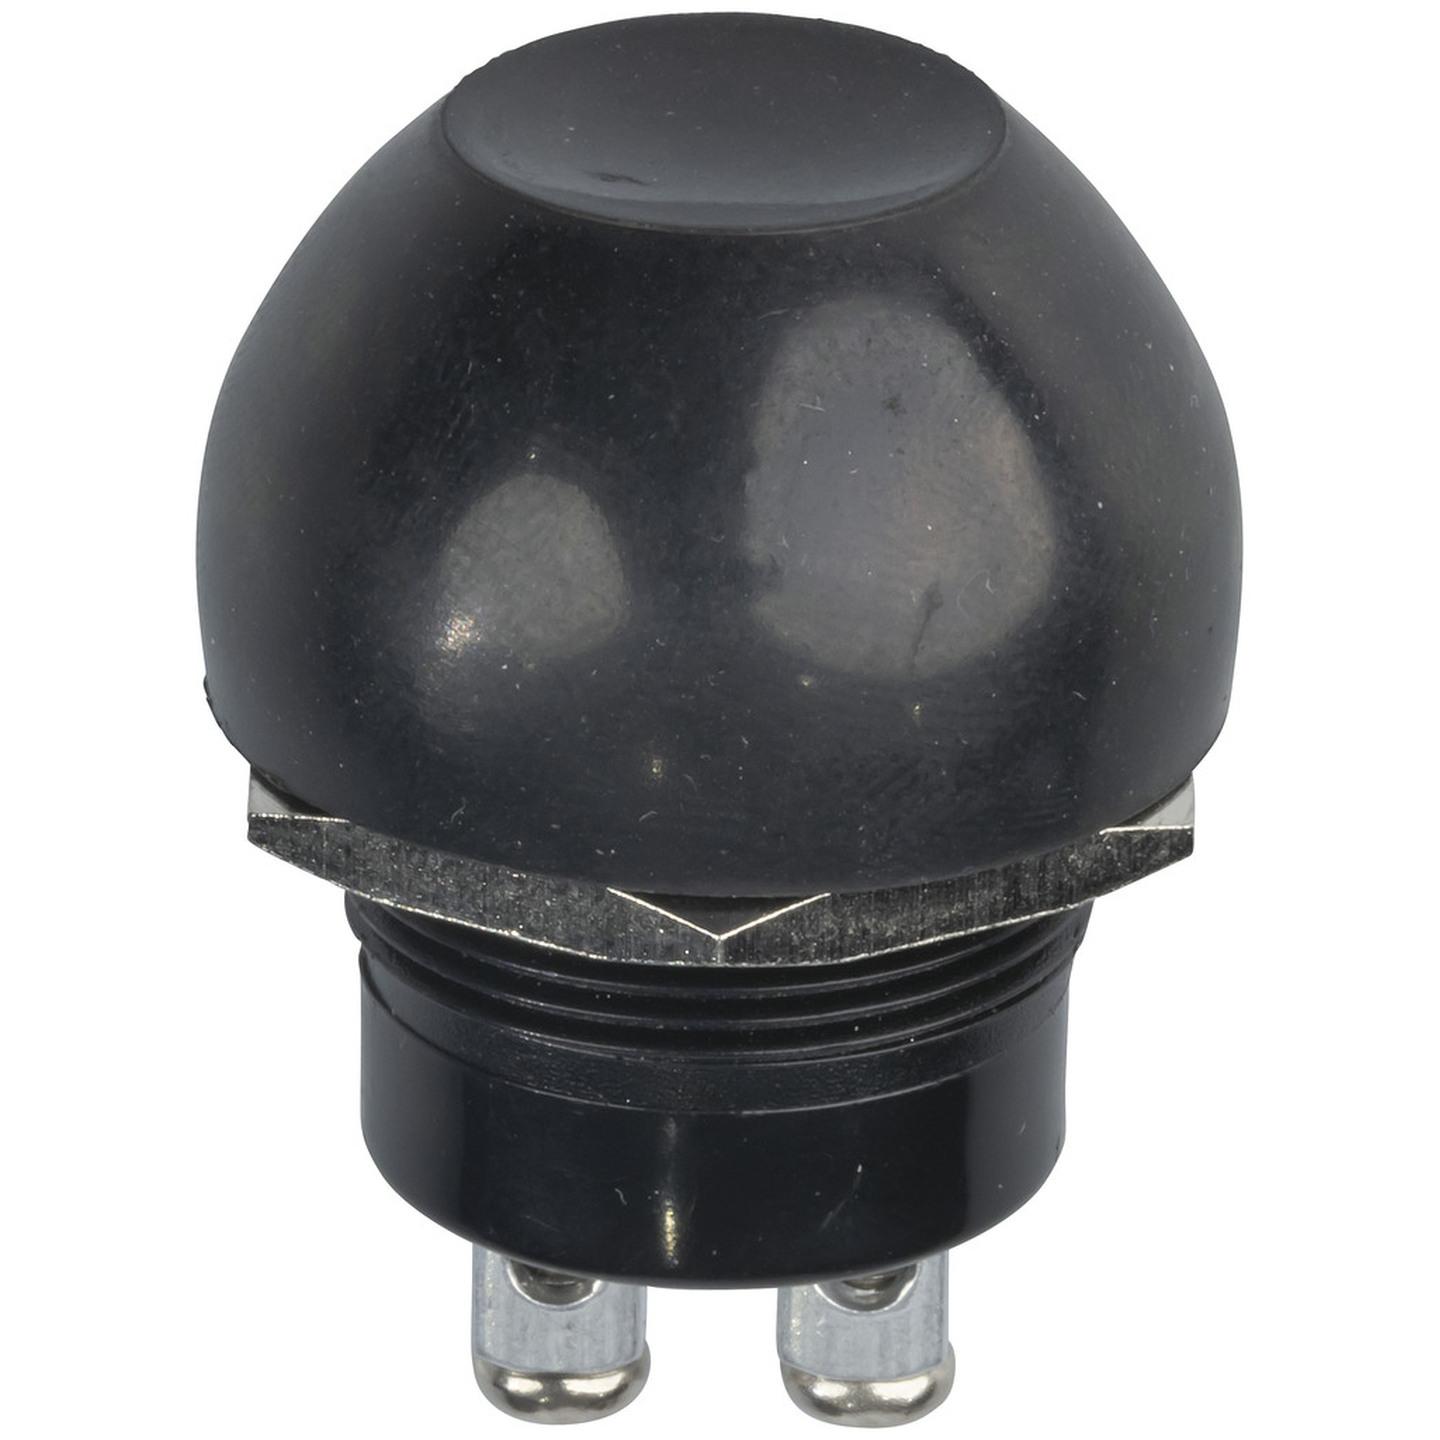 5A DC SPST Waterproof Momentary Pushbutton Switch - 30mm Diameter